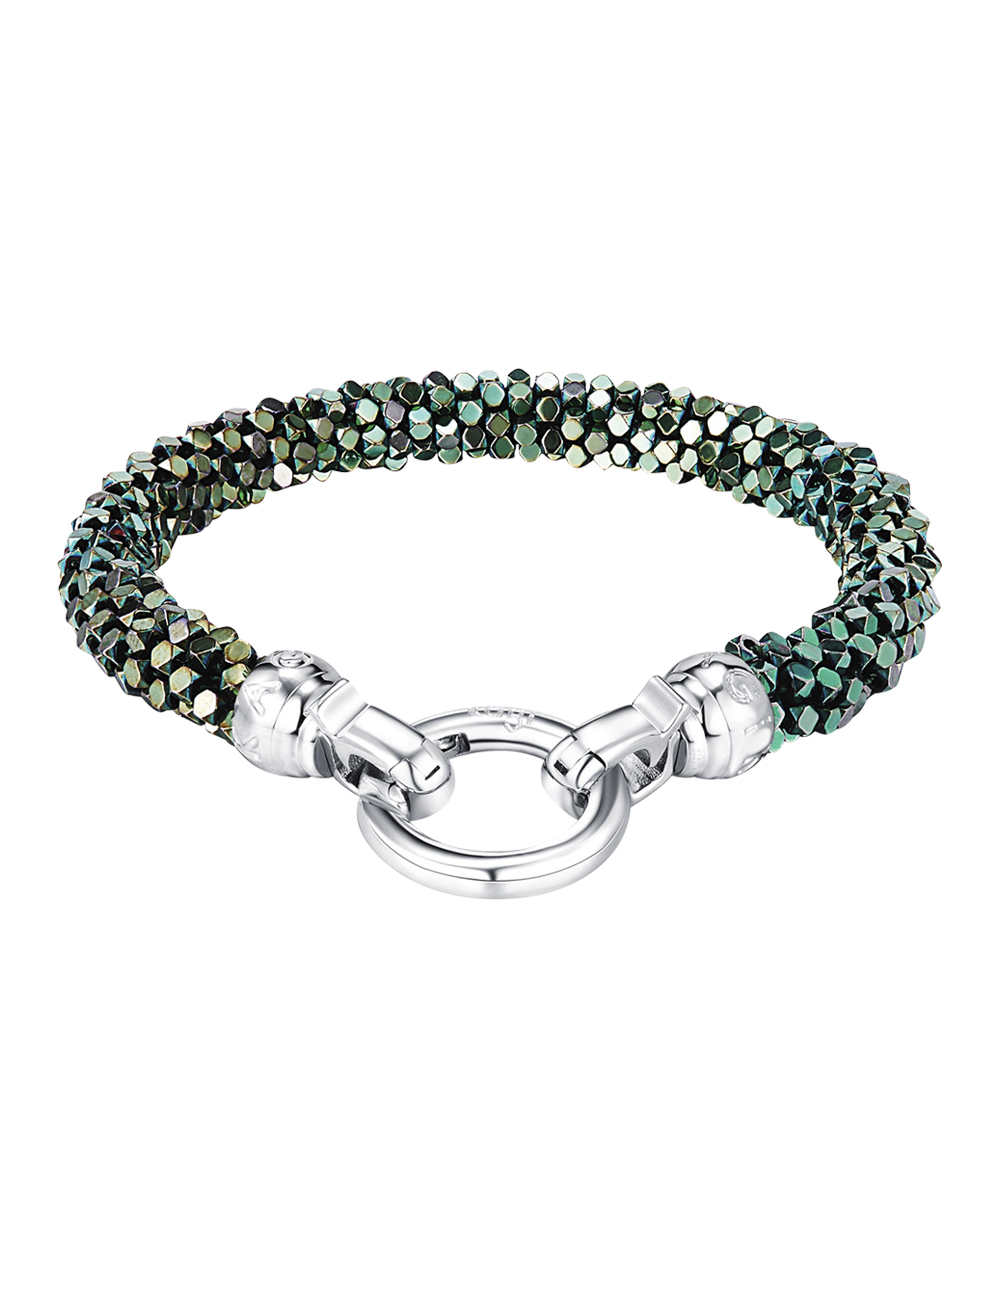 Bracelet, $169, by Kagi